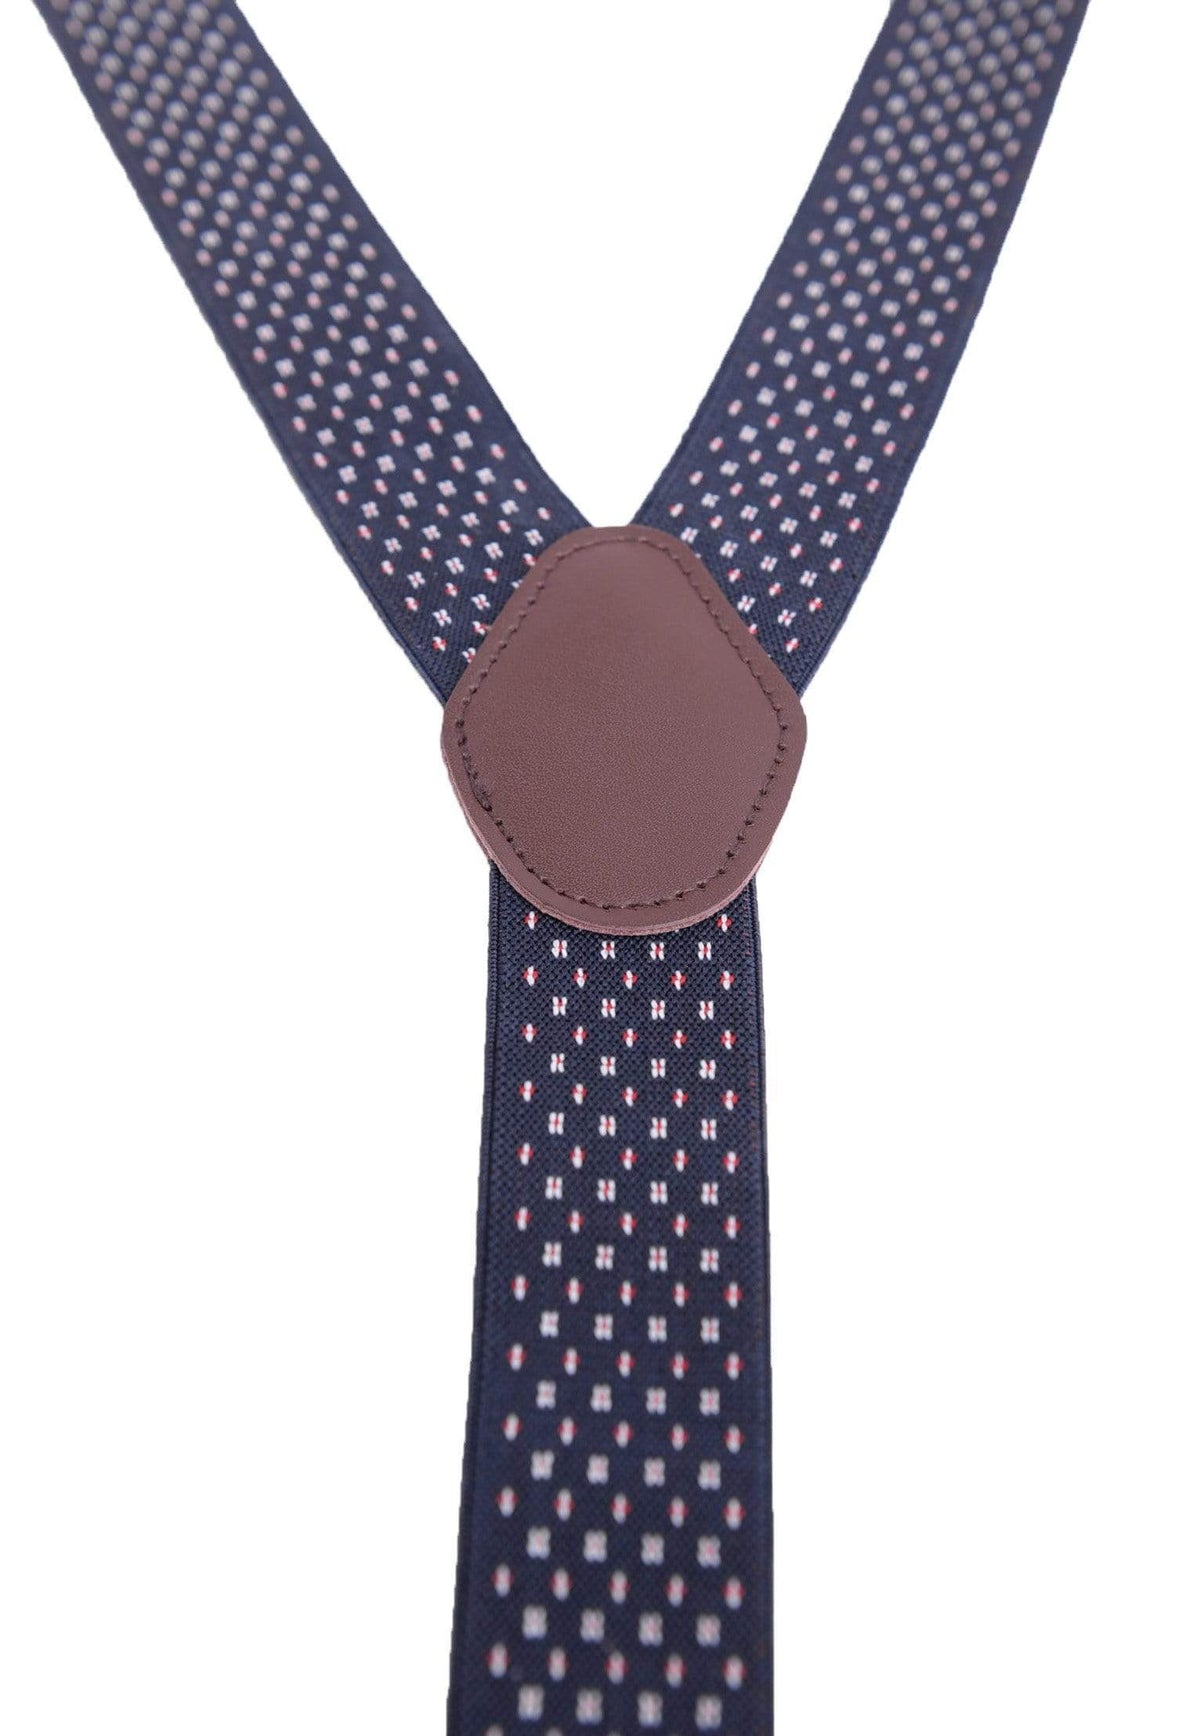 Ariston Suspenders Mens Button Brown Leather Braces Adjustable Y Back Suspenders Xlong Available